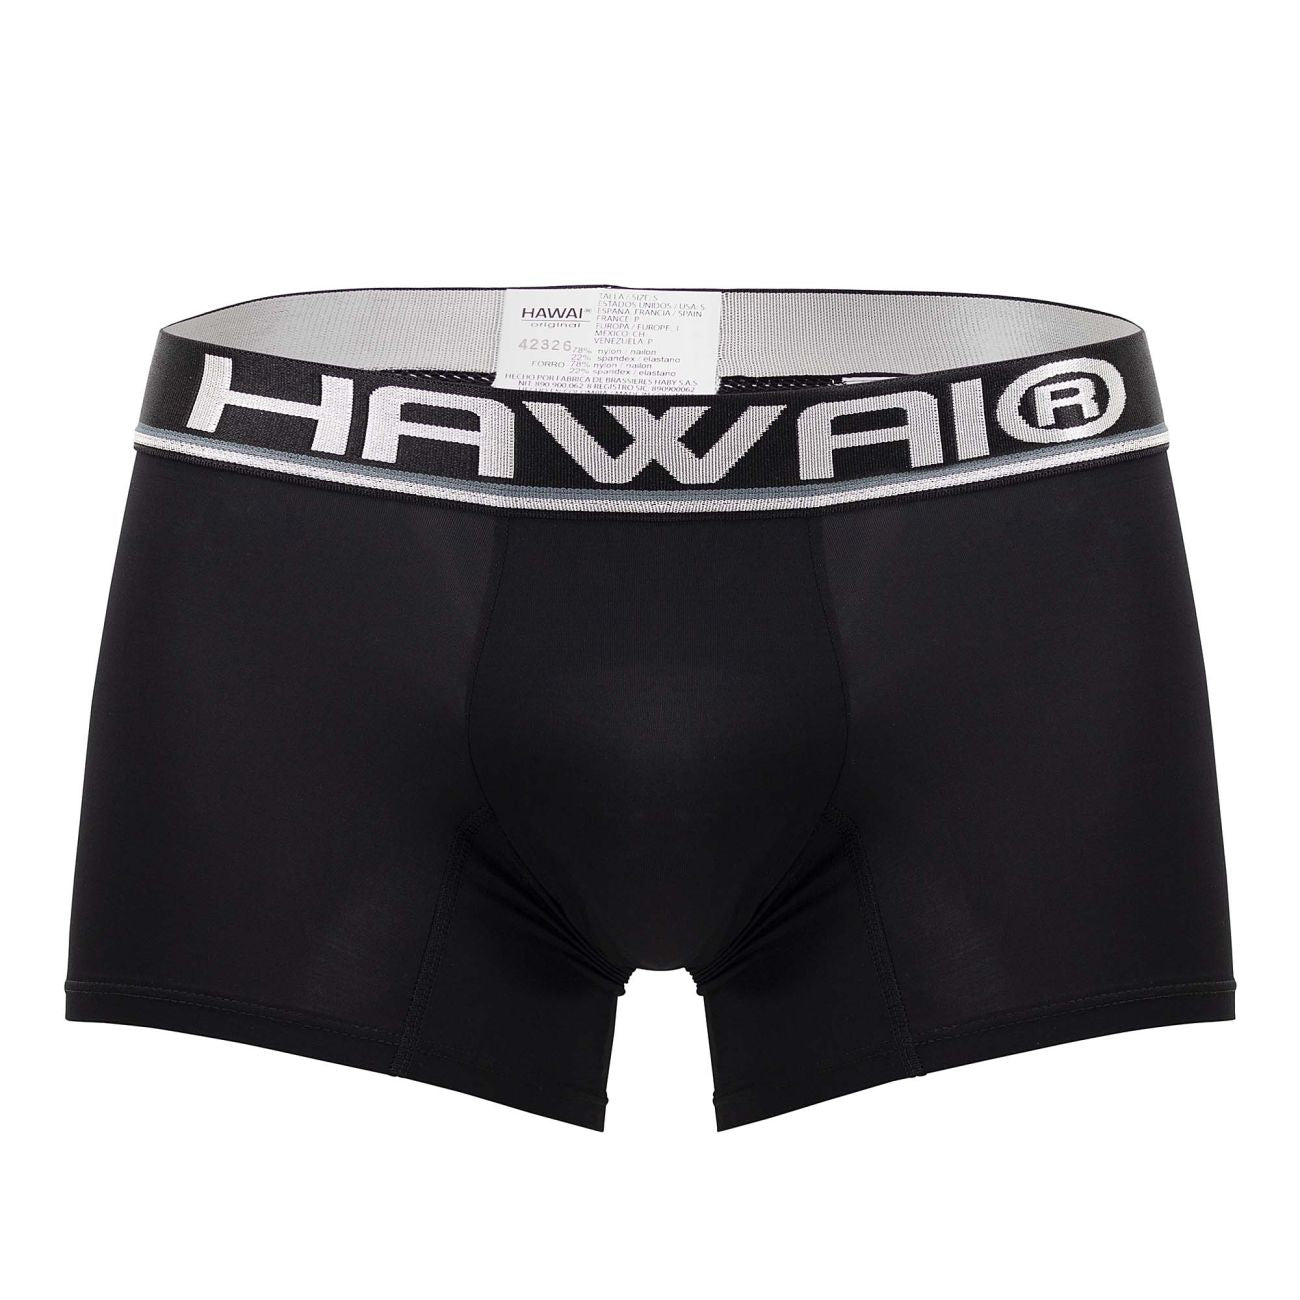 HAWAI Microfiber Boxer Briefs